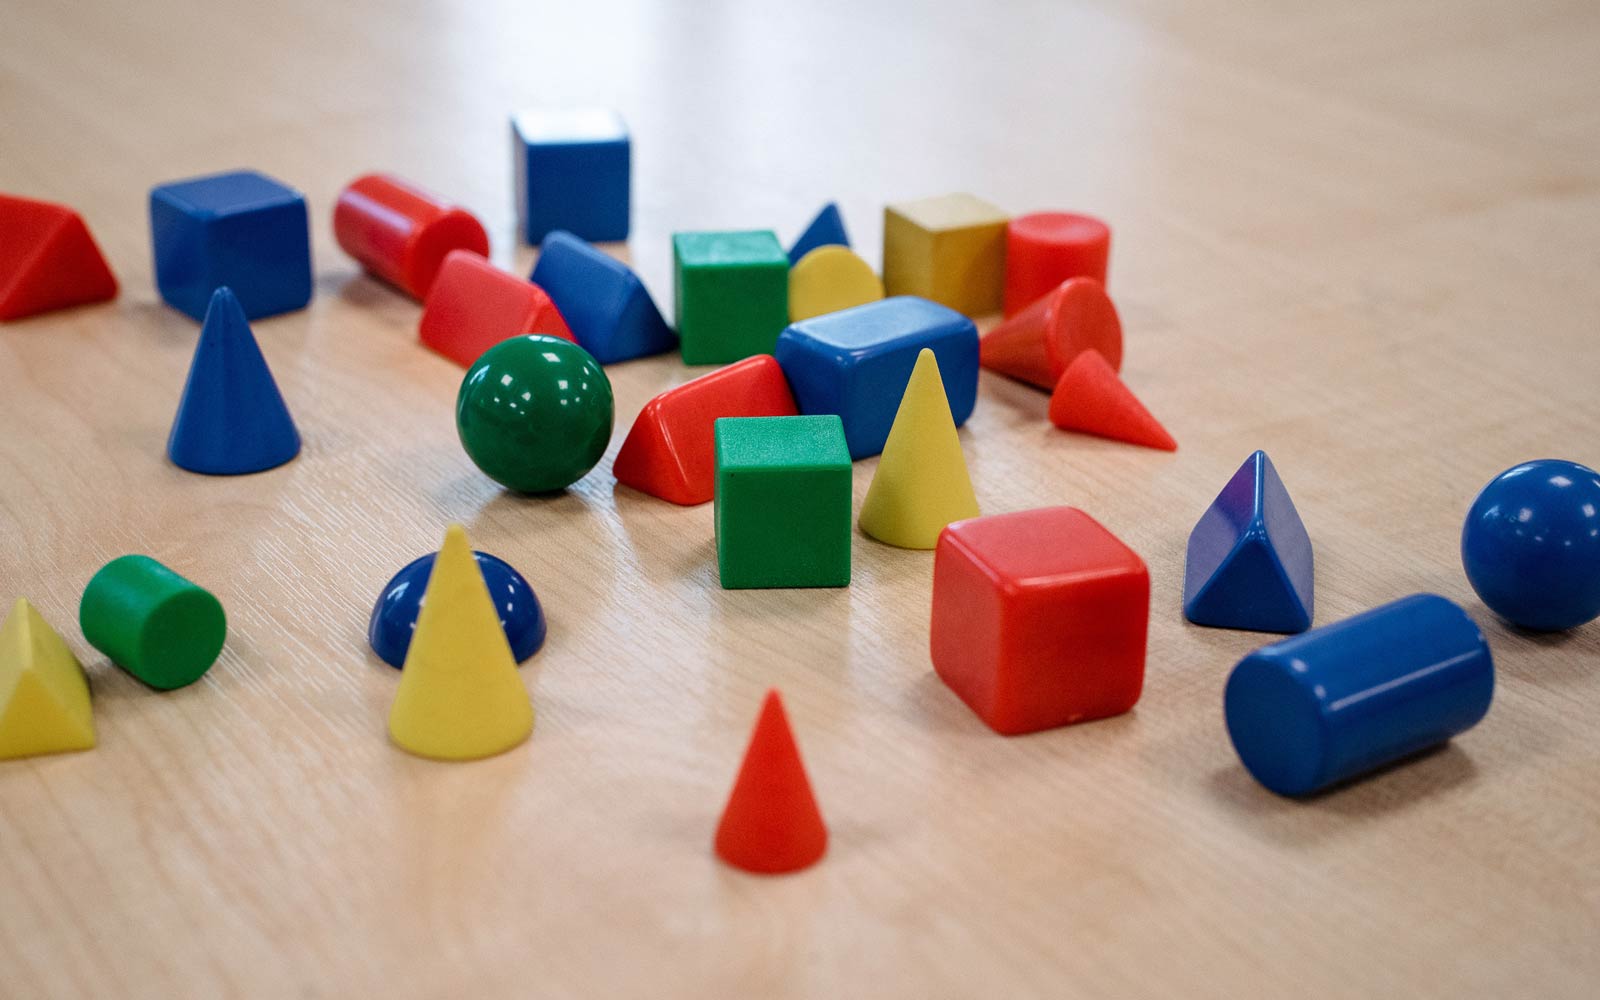 Coloured building blocks on table